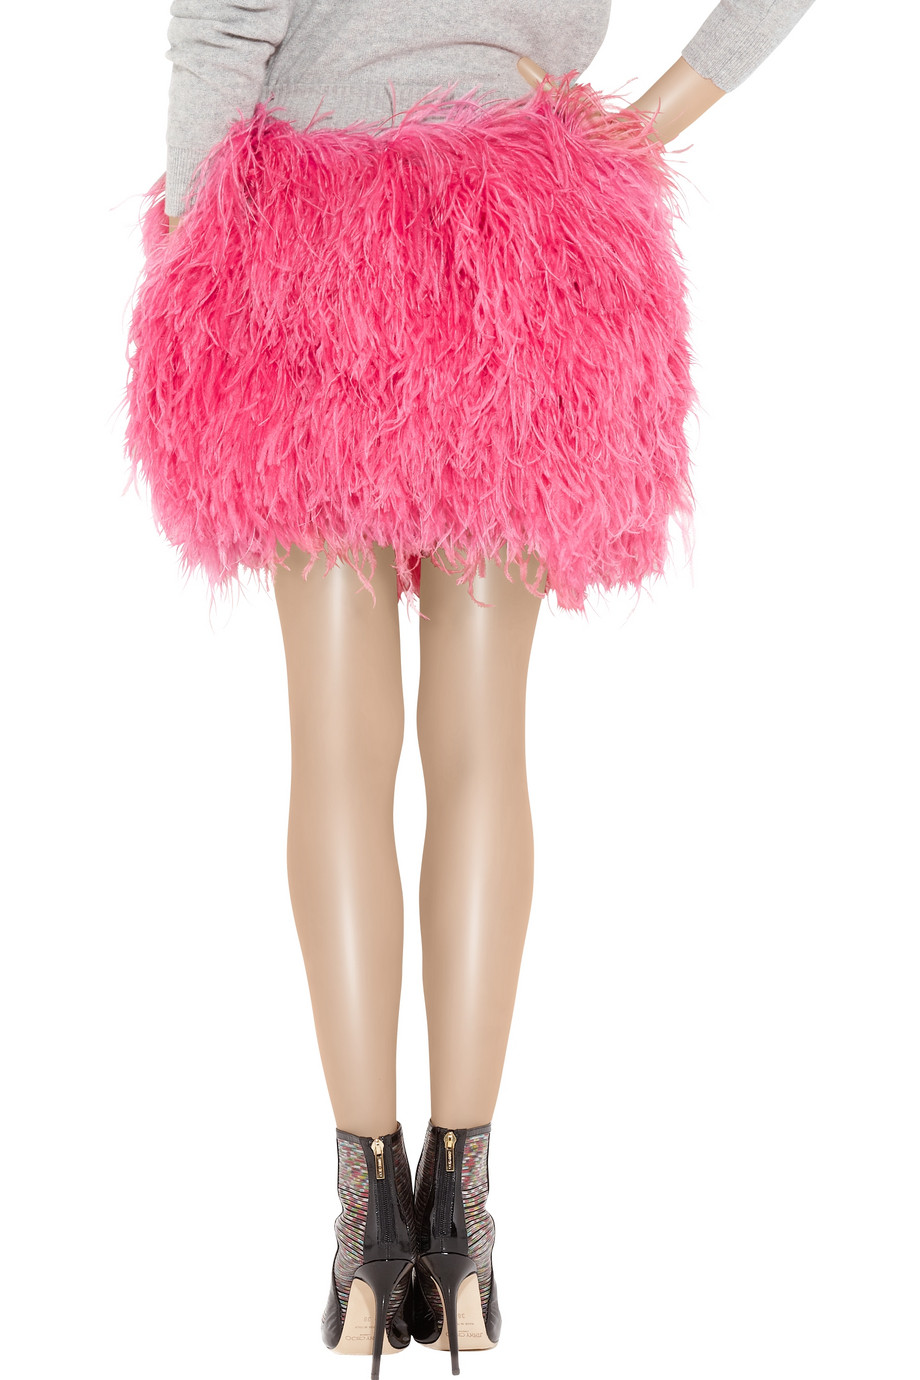 Dolce & Gabbana Ostrich Feather Mini Skirt in Fuchsia (Purple) - Lyst